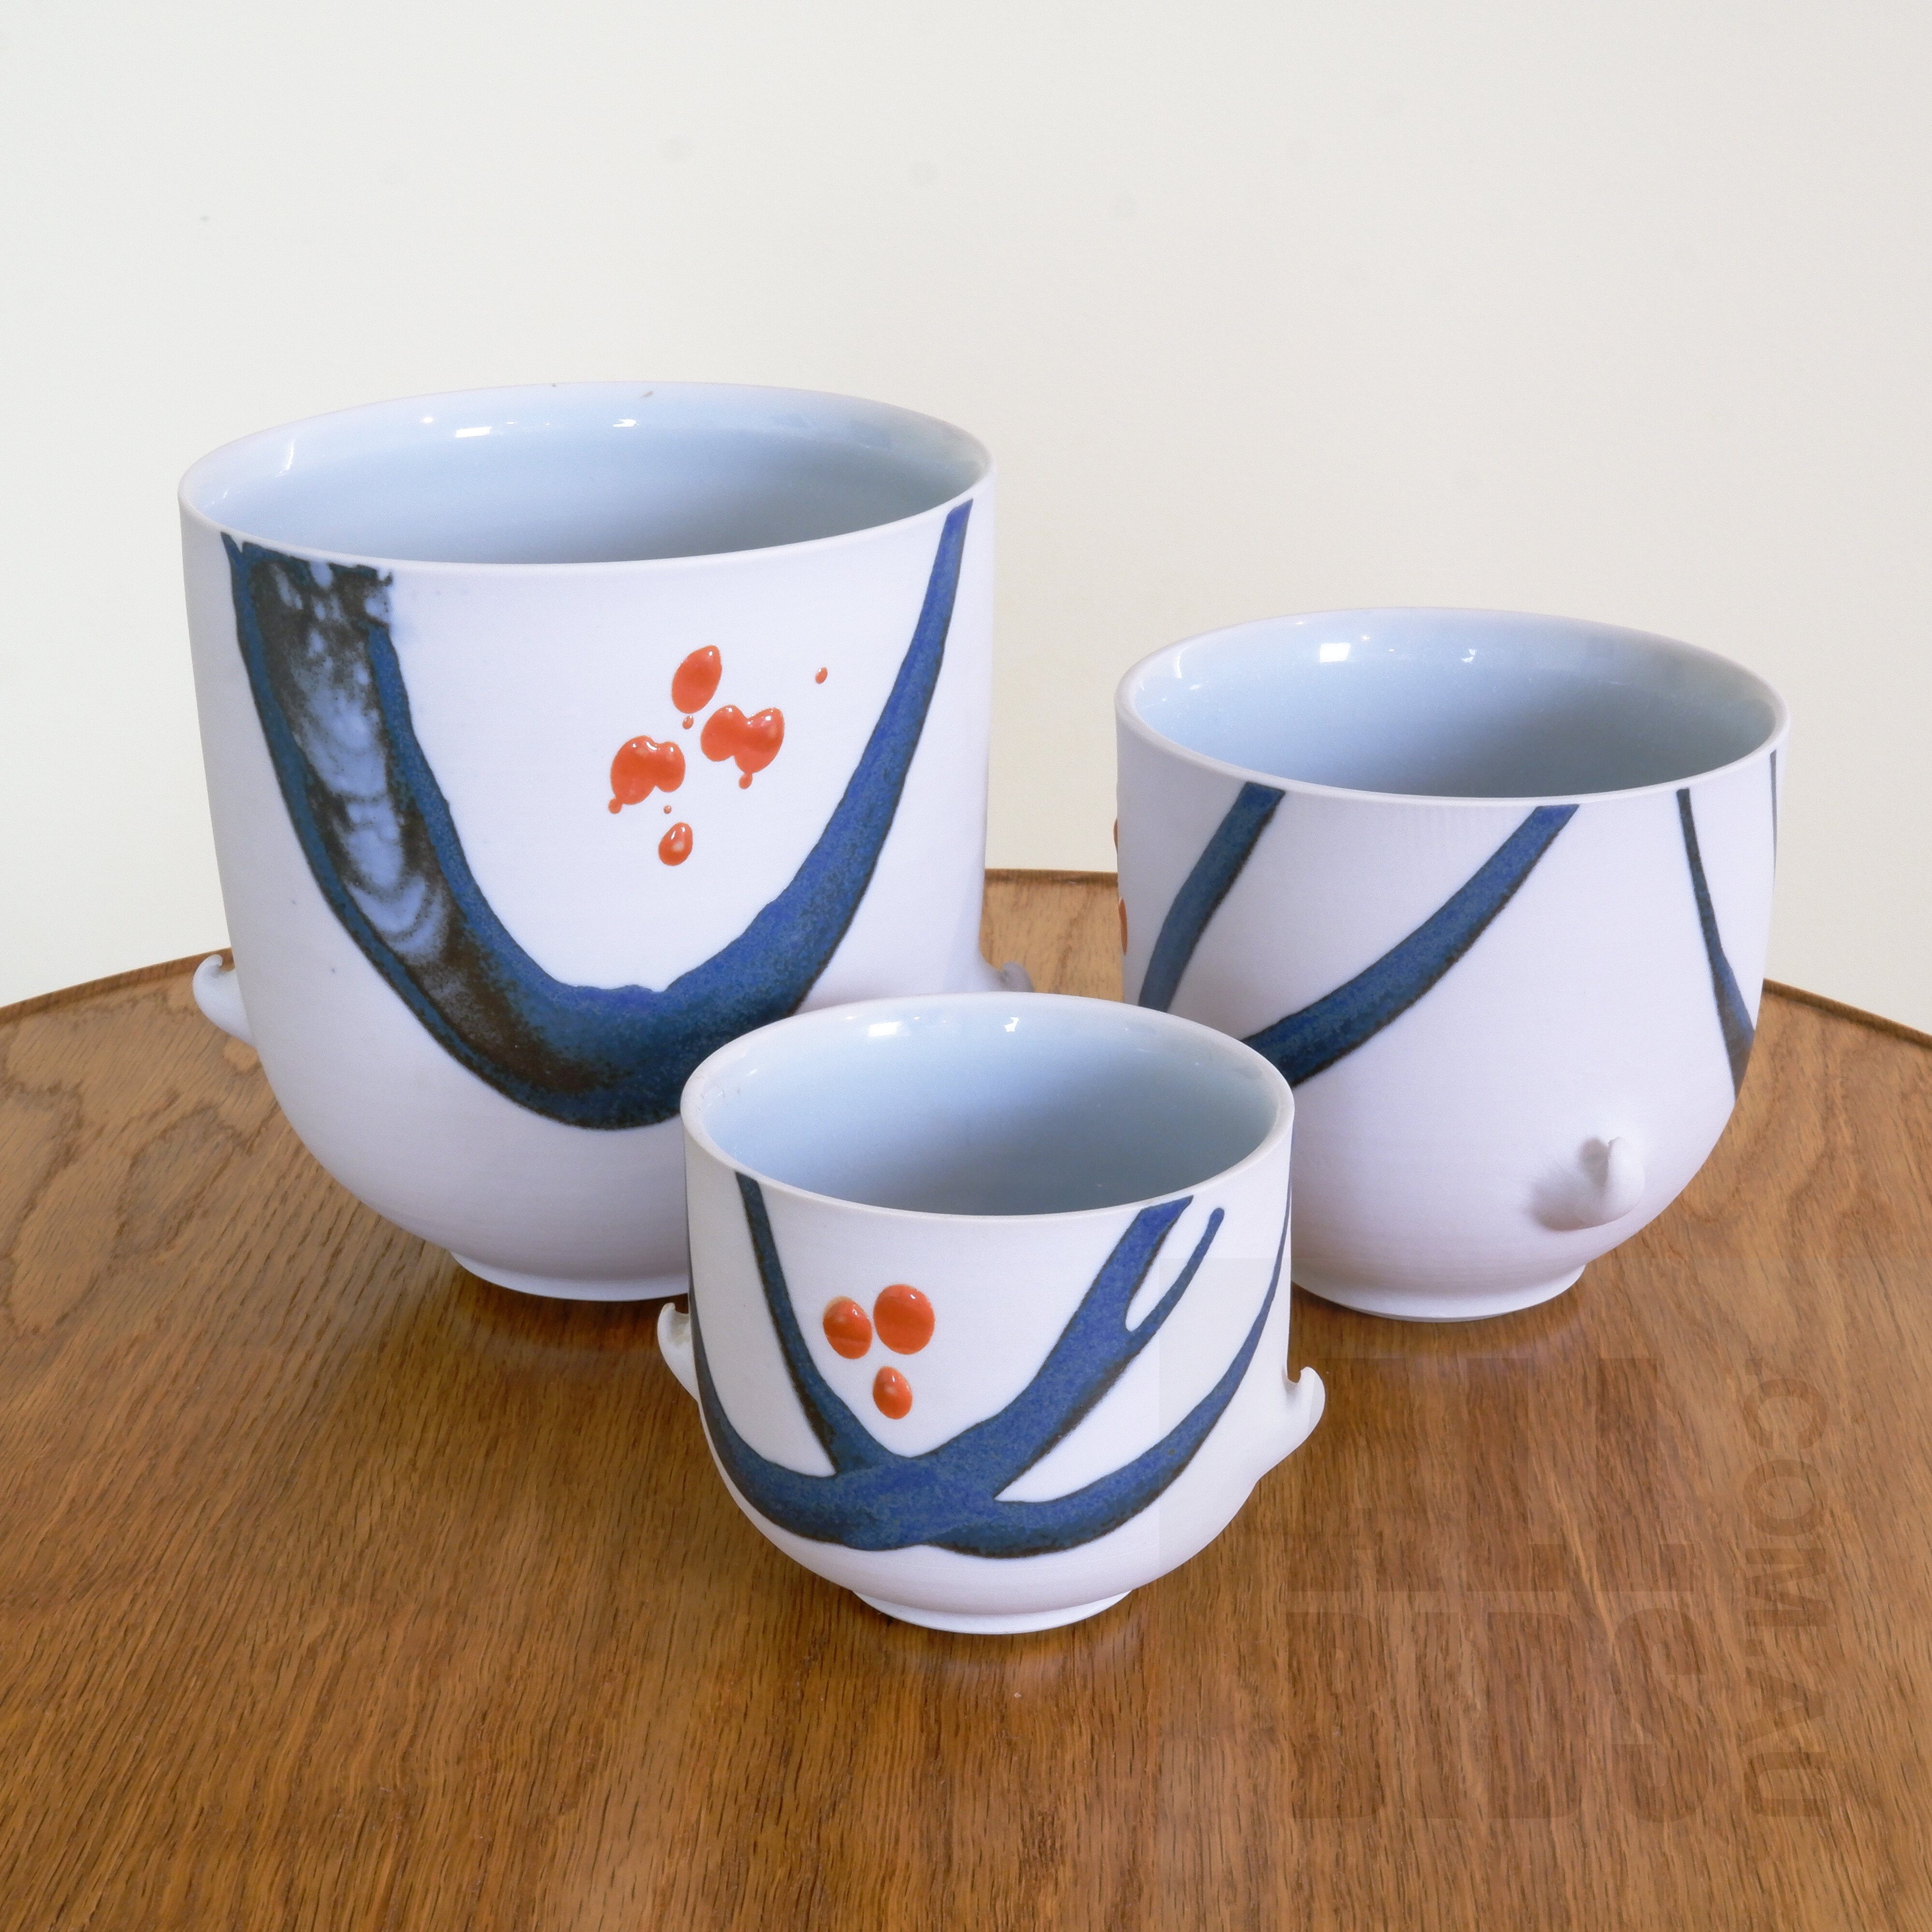 'Les Blakebrough (Britain, Australia 1930-) Three Graduating Glazed Porcelain Bowls'